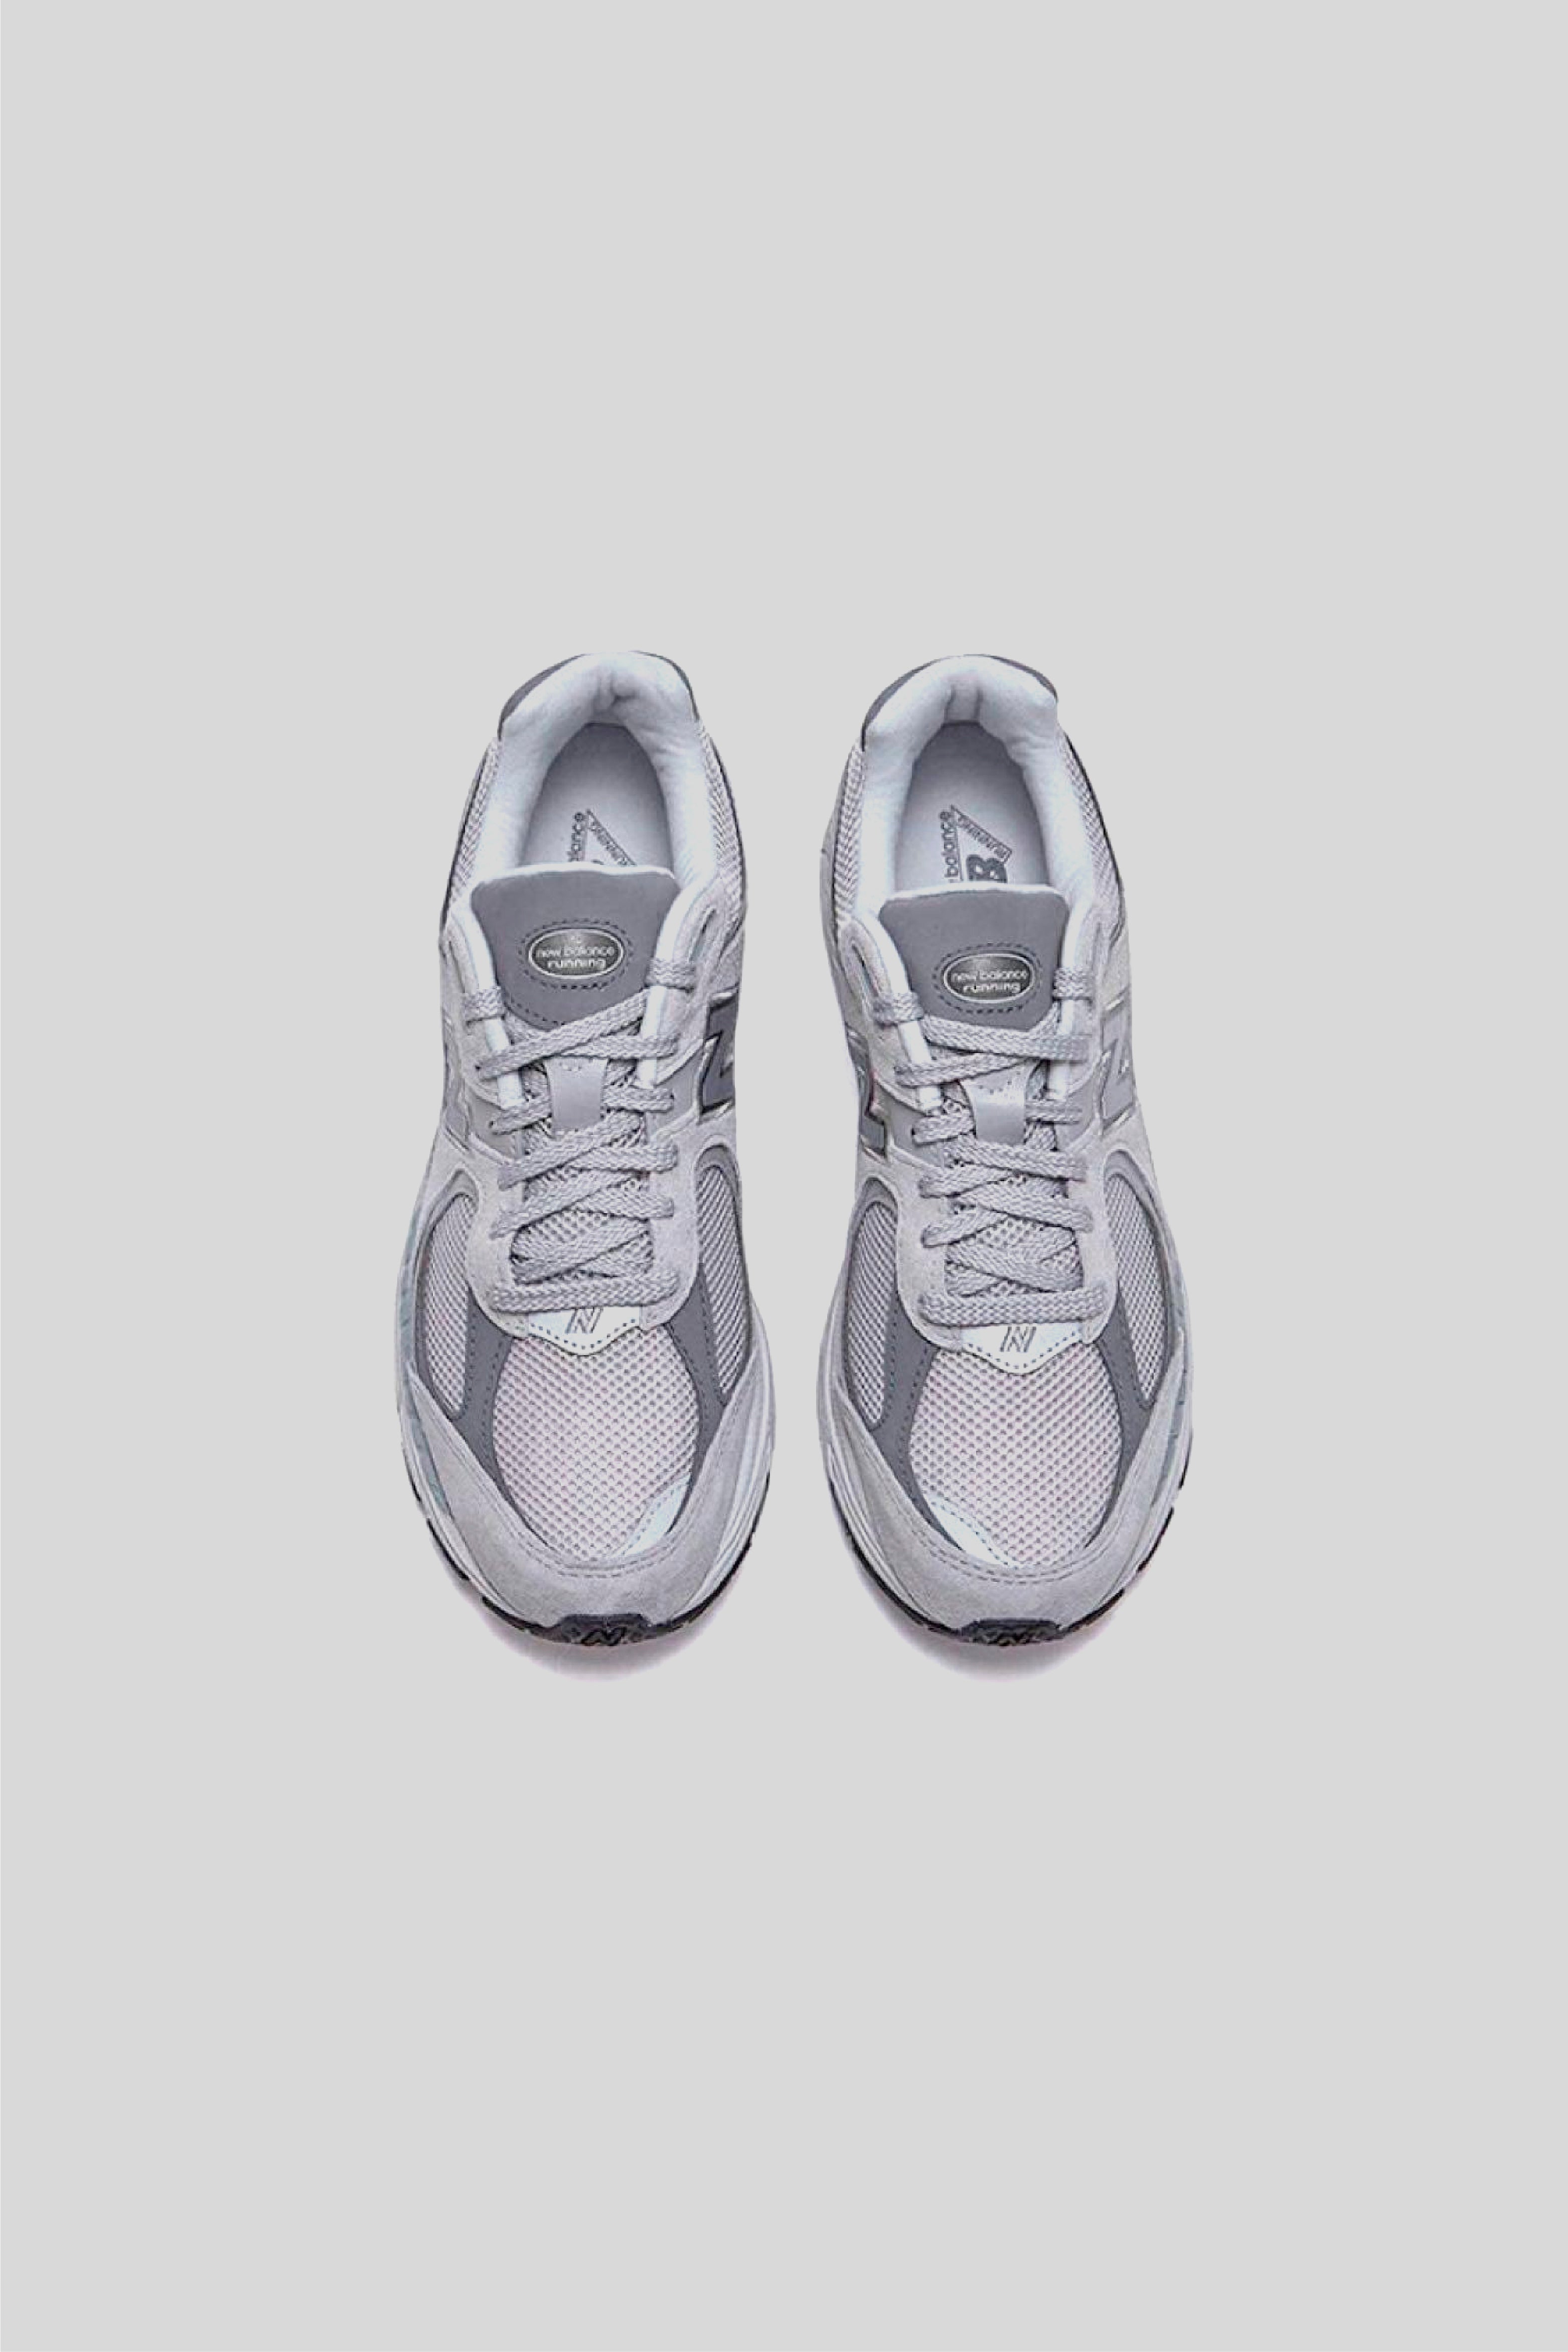 Selectshop FRAME - NEW BALANCE ML2002R0 "Gray D Wise" Footwear Concept Store Dubai